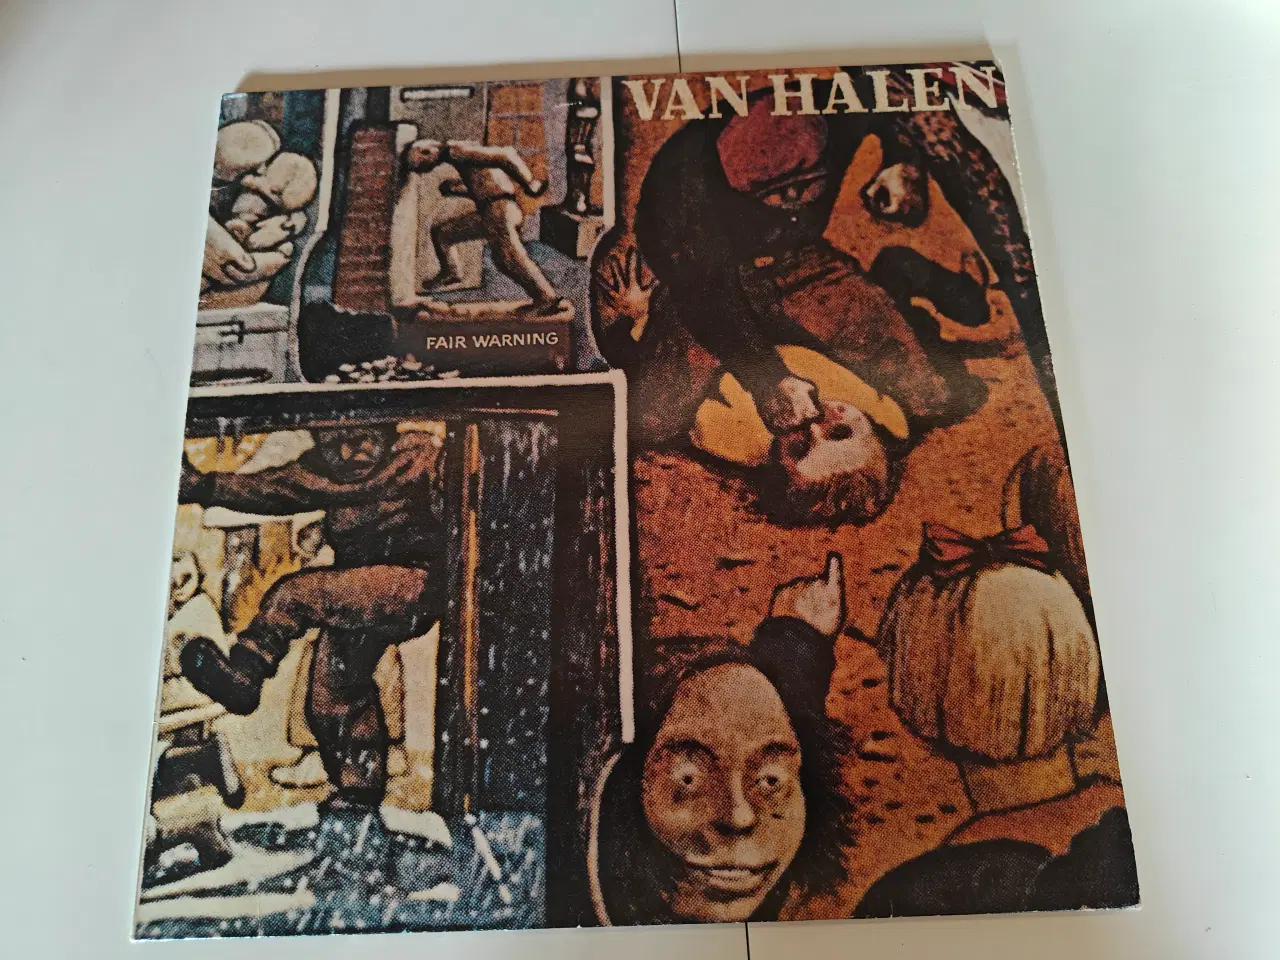 Billede 1 - LP med Van Halen, Fair Warning 